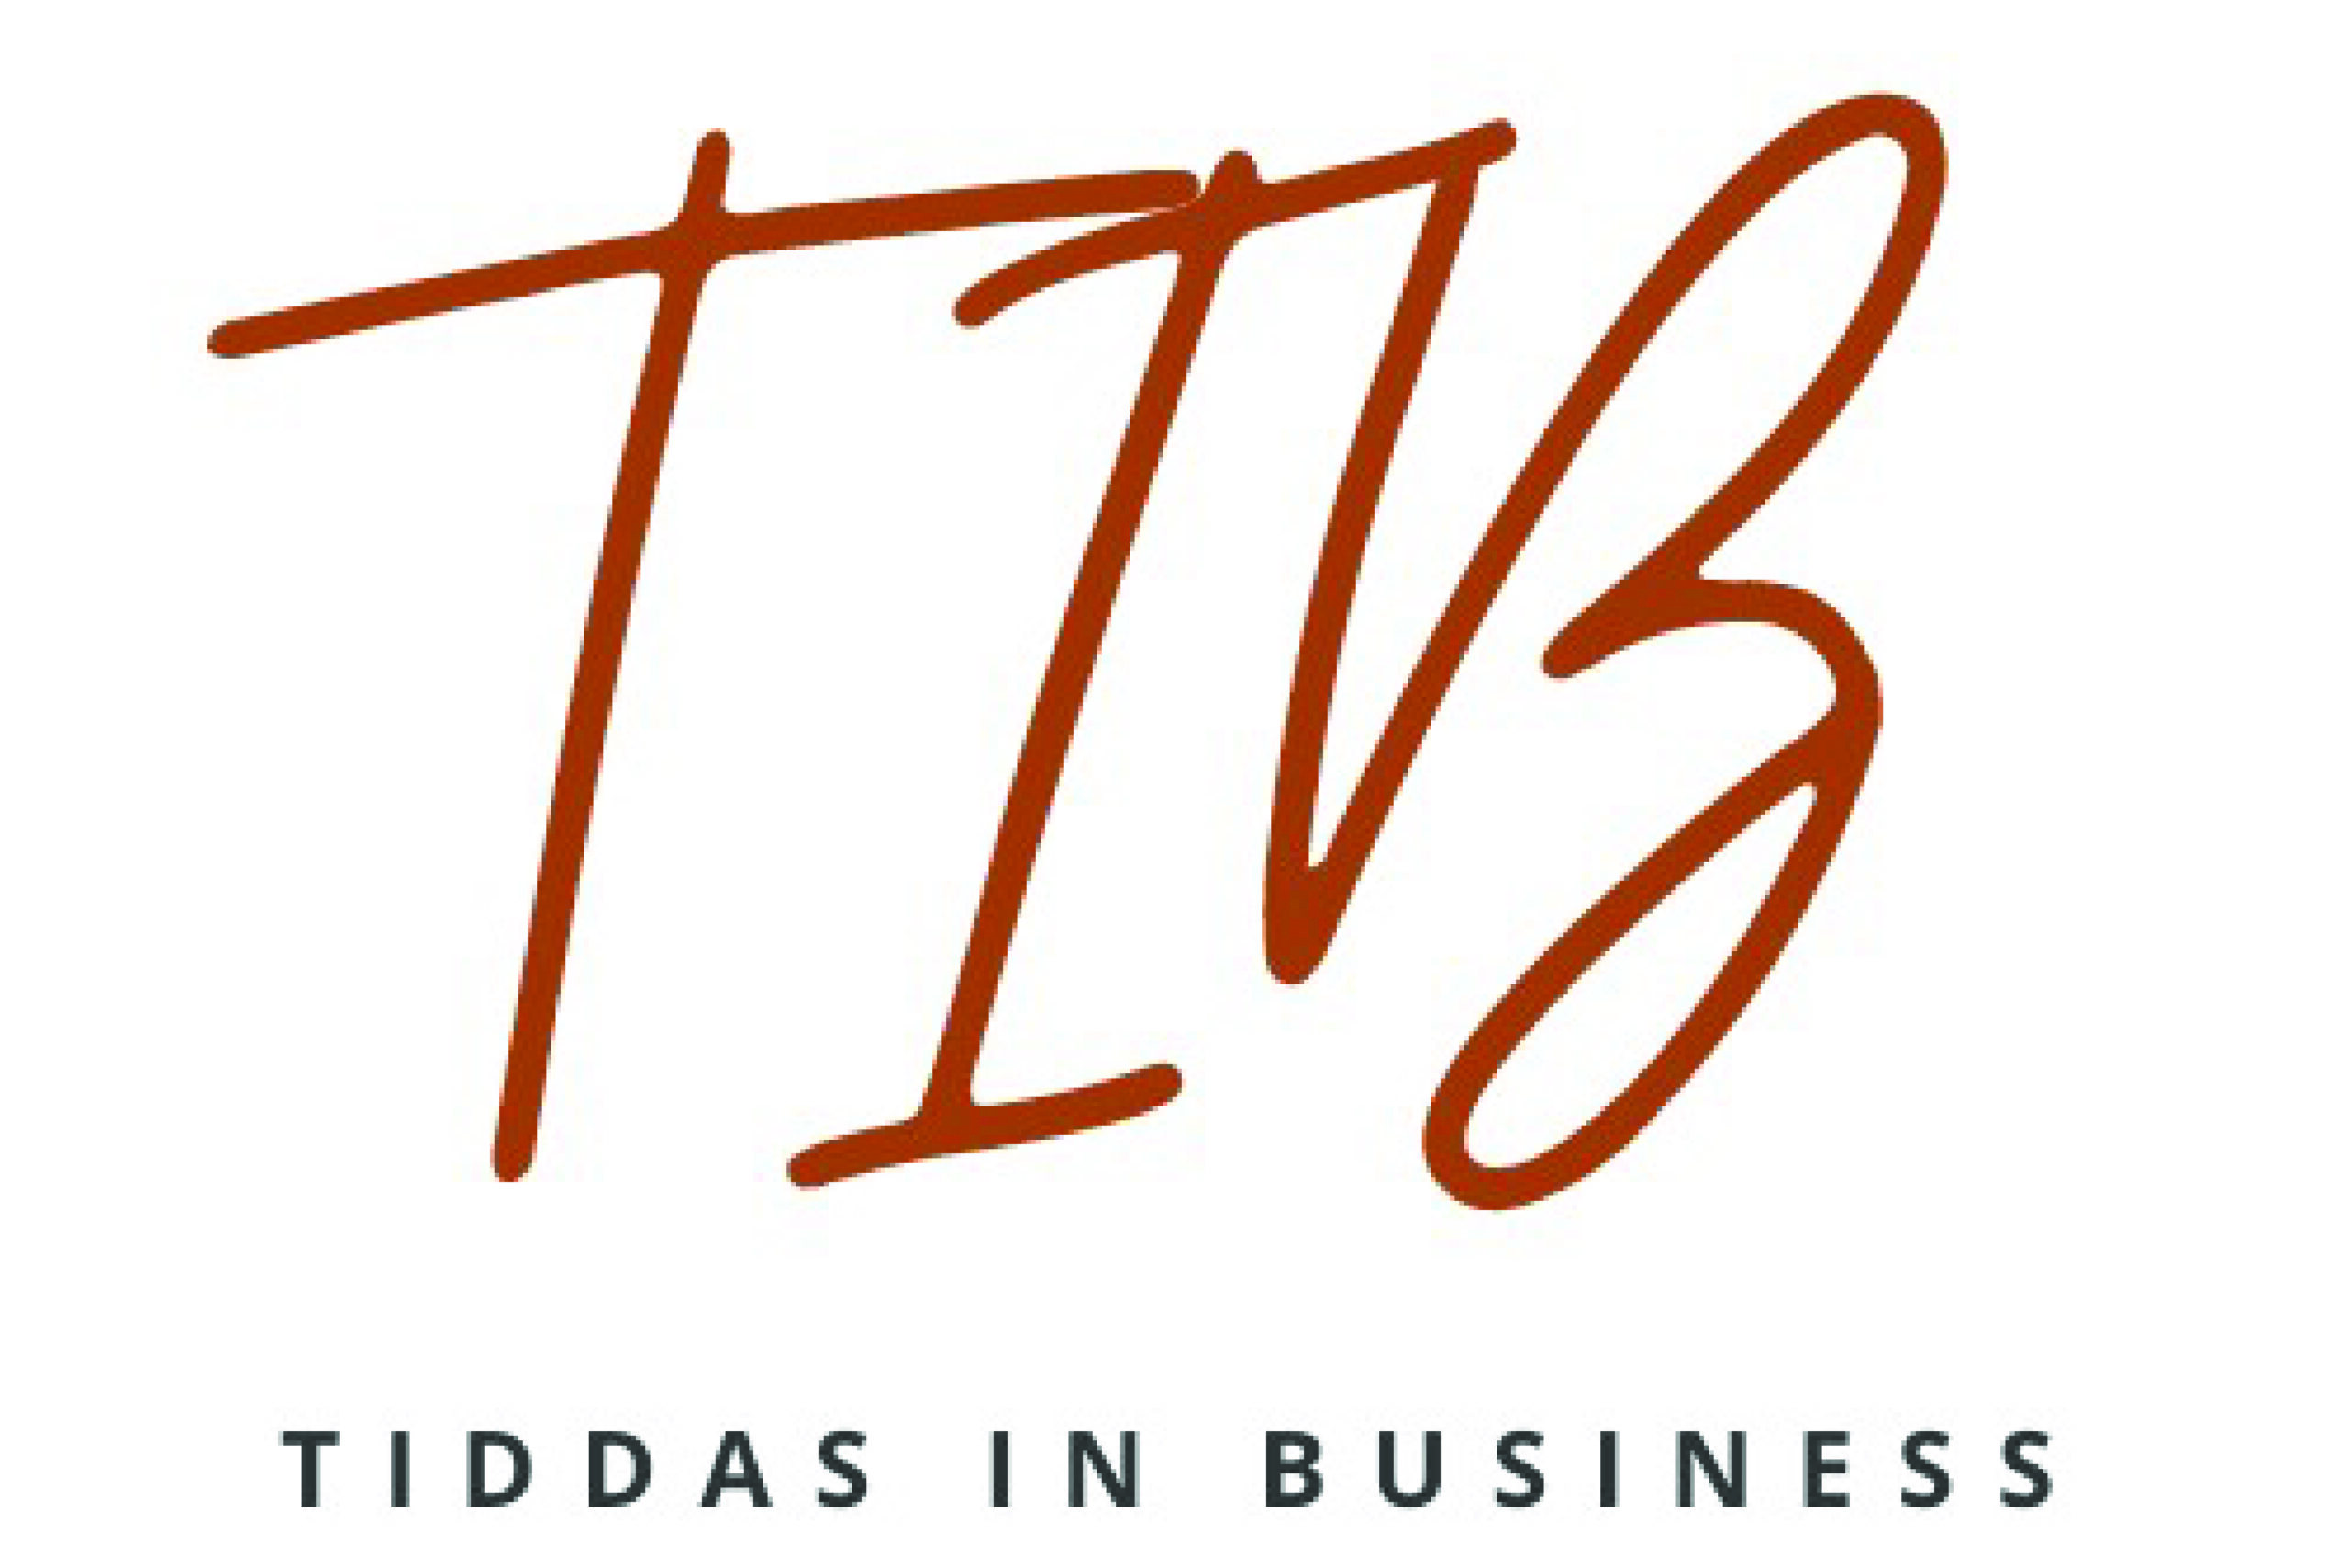 Tiddas in business logo